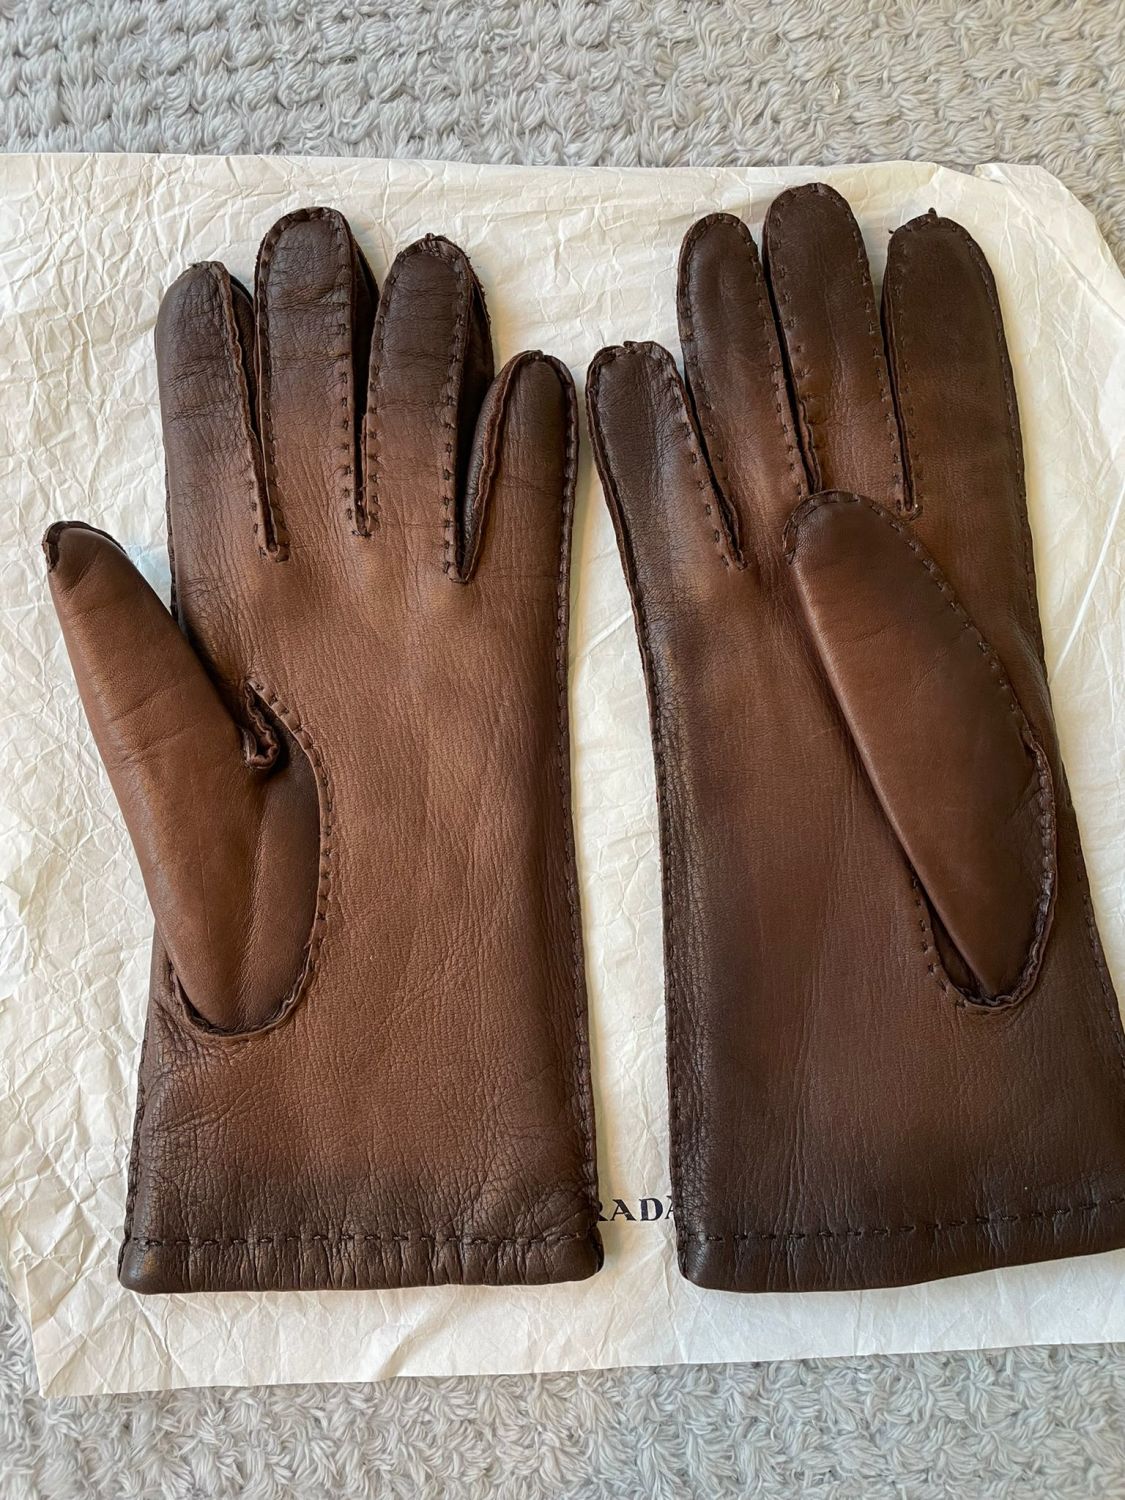 Prada gloves Deer skin and cashmere Size 7.5 - Image 2 of 5